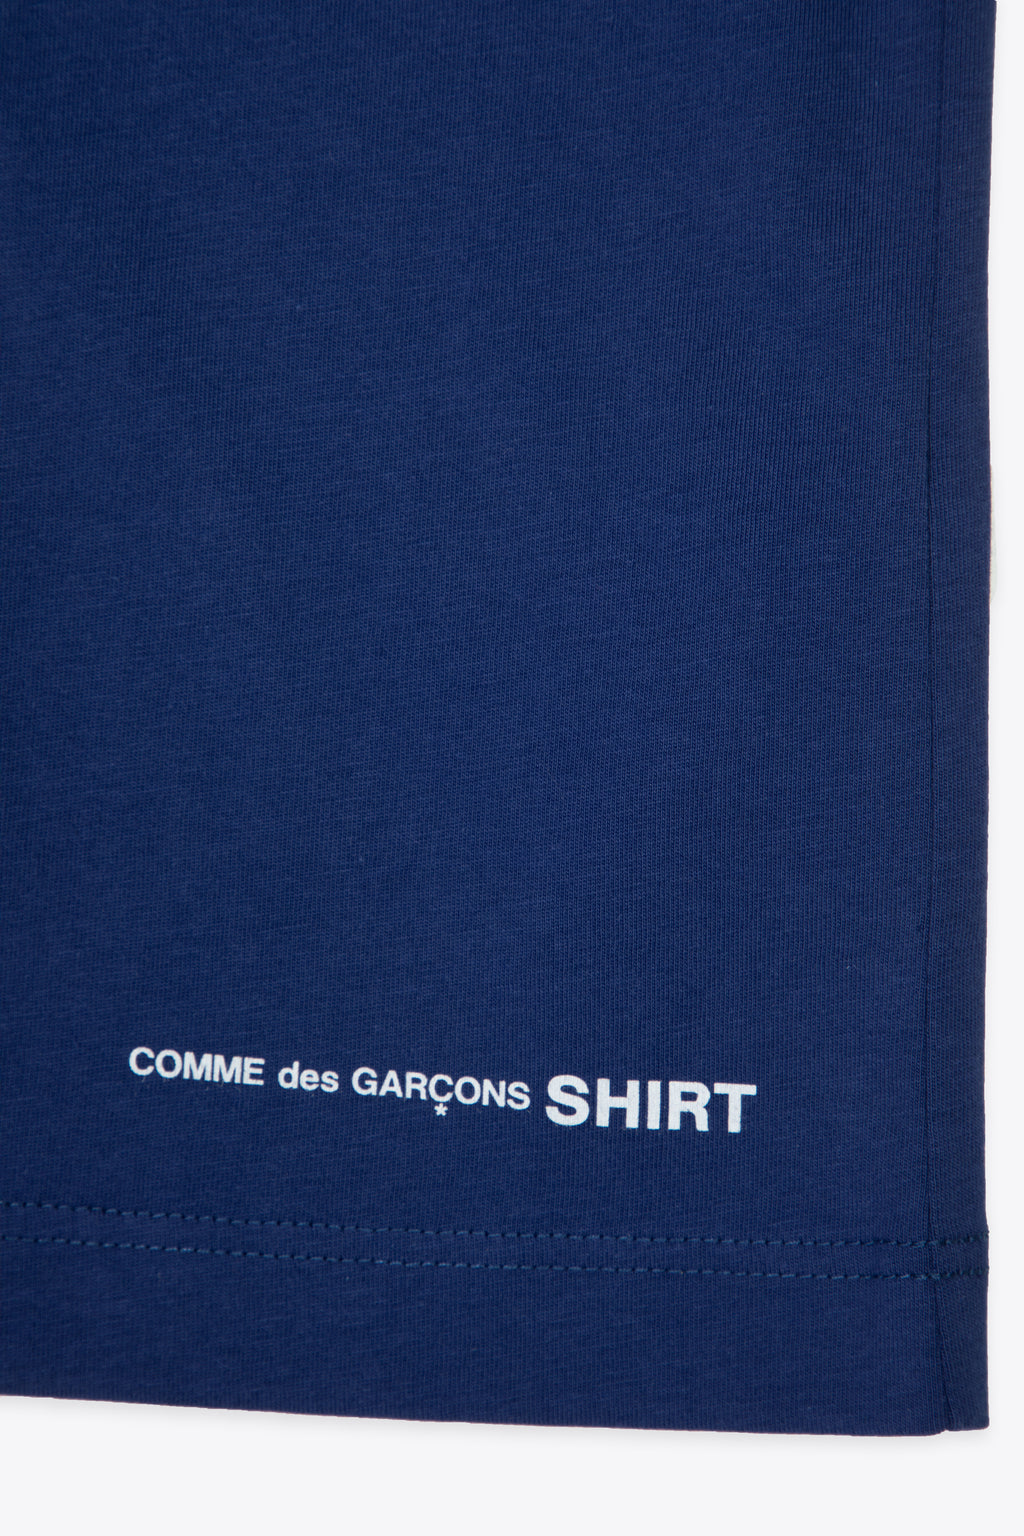 alt-image__Navy-blue-cotton-oversize-t-shirt-with-logo